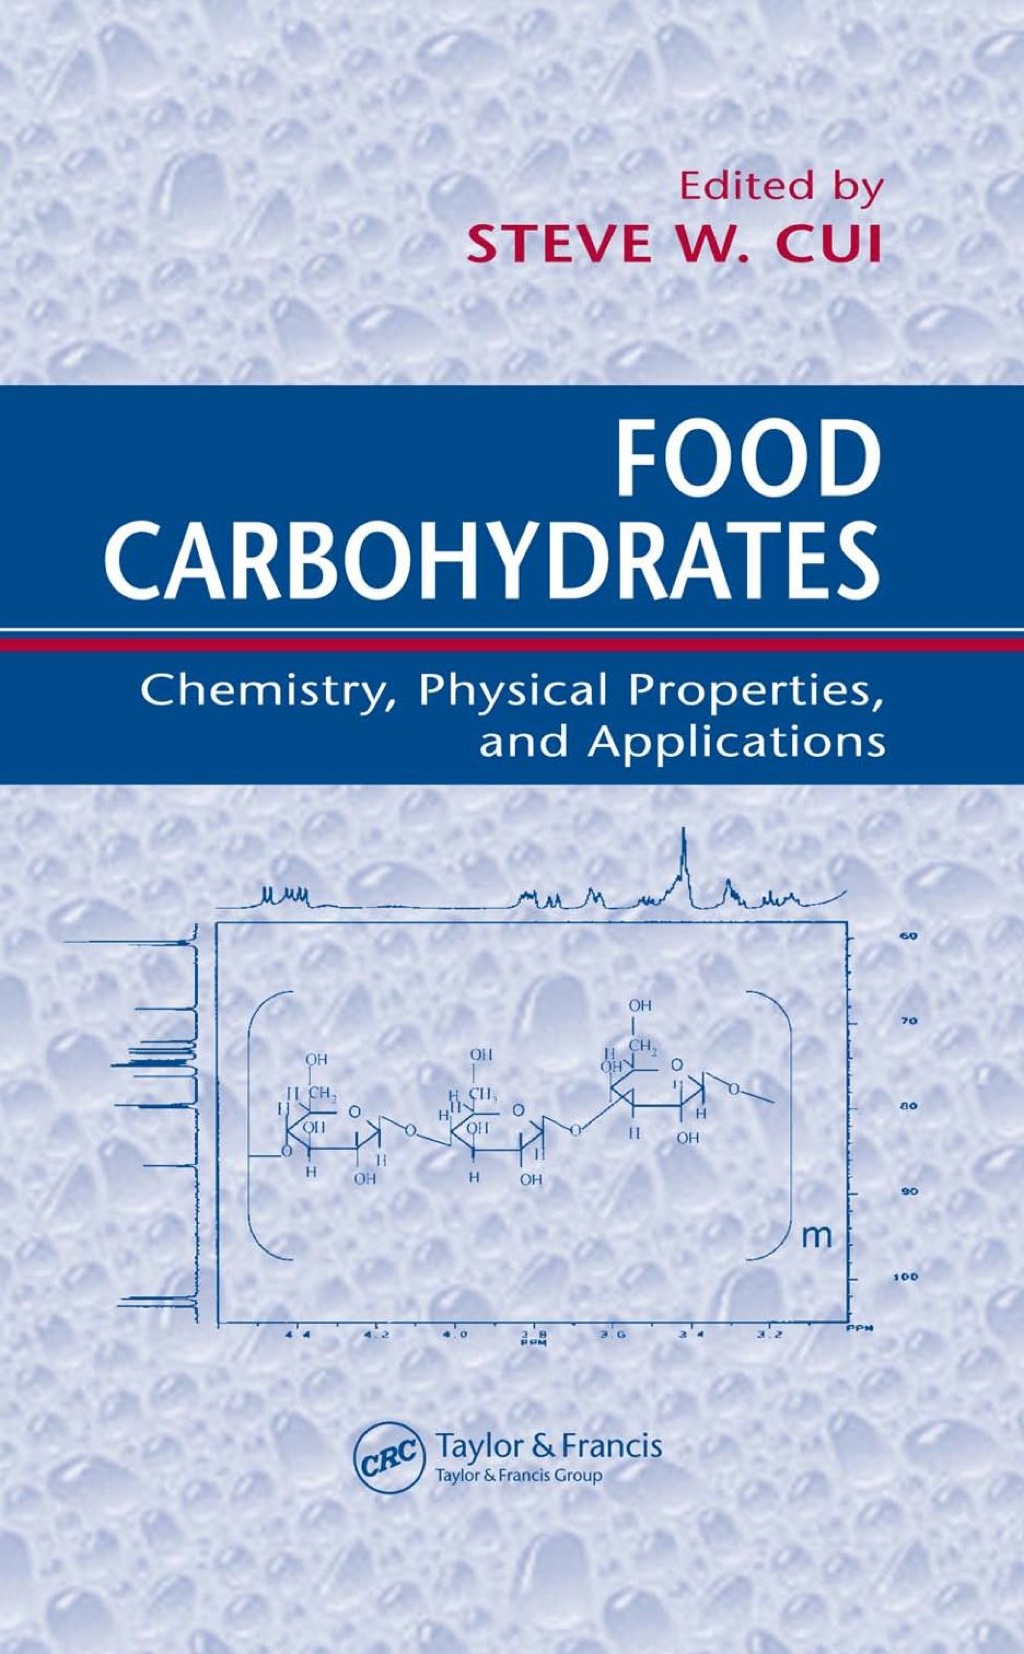 Food Carbohydrates (eBook) - Steve W. Cui